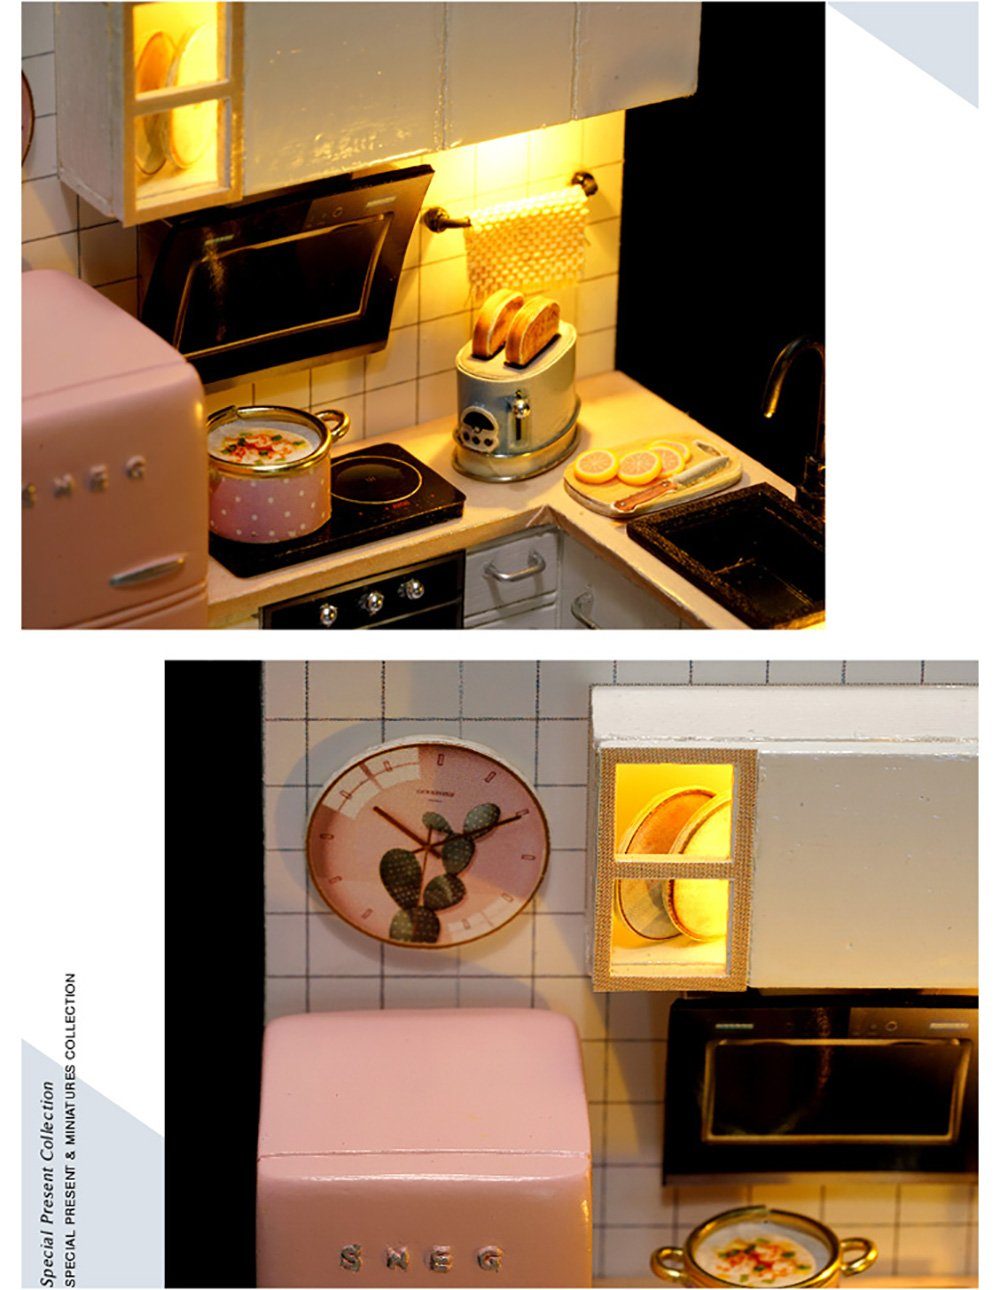 Küche, 1:24, zum Szenen Puzzleteile, 3D-Puzzle, basteln-Serie-Mini hölzernes Modellbausatz Cute Mini Puppenhaus Room mit Möbeln DIY Miniaturhaus Miniatur 3D-Puzzle